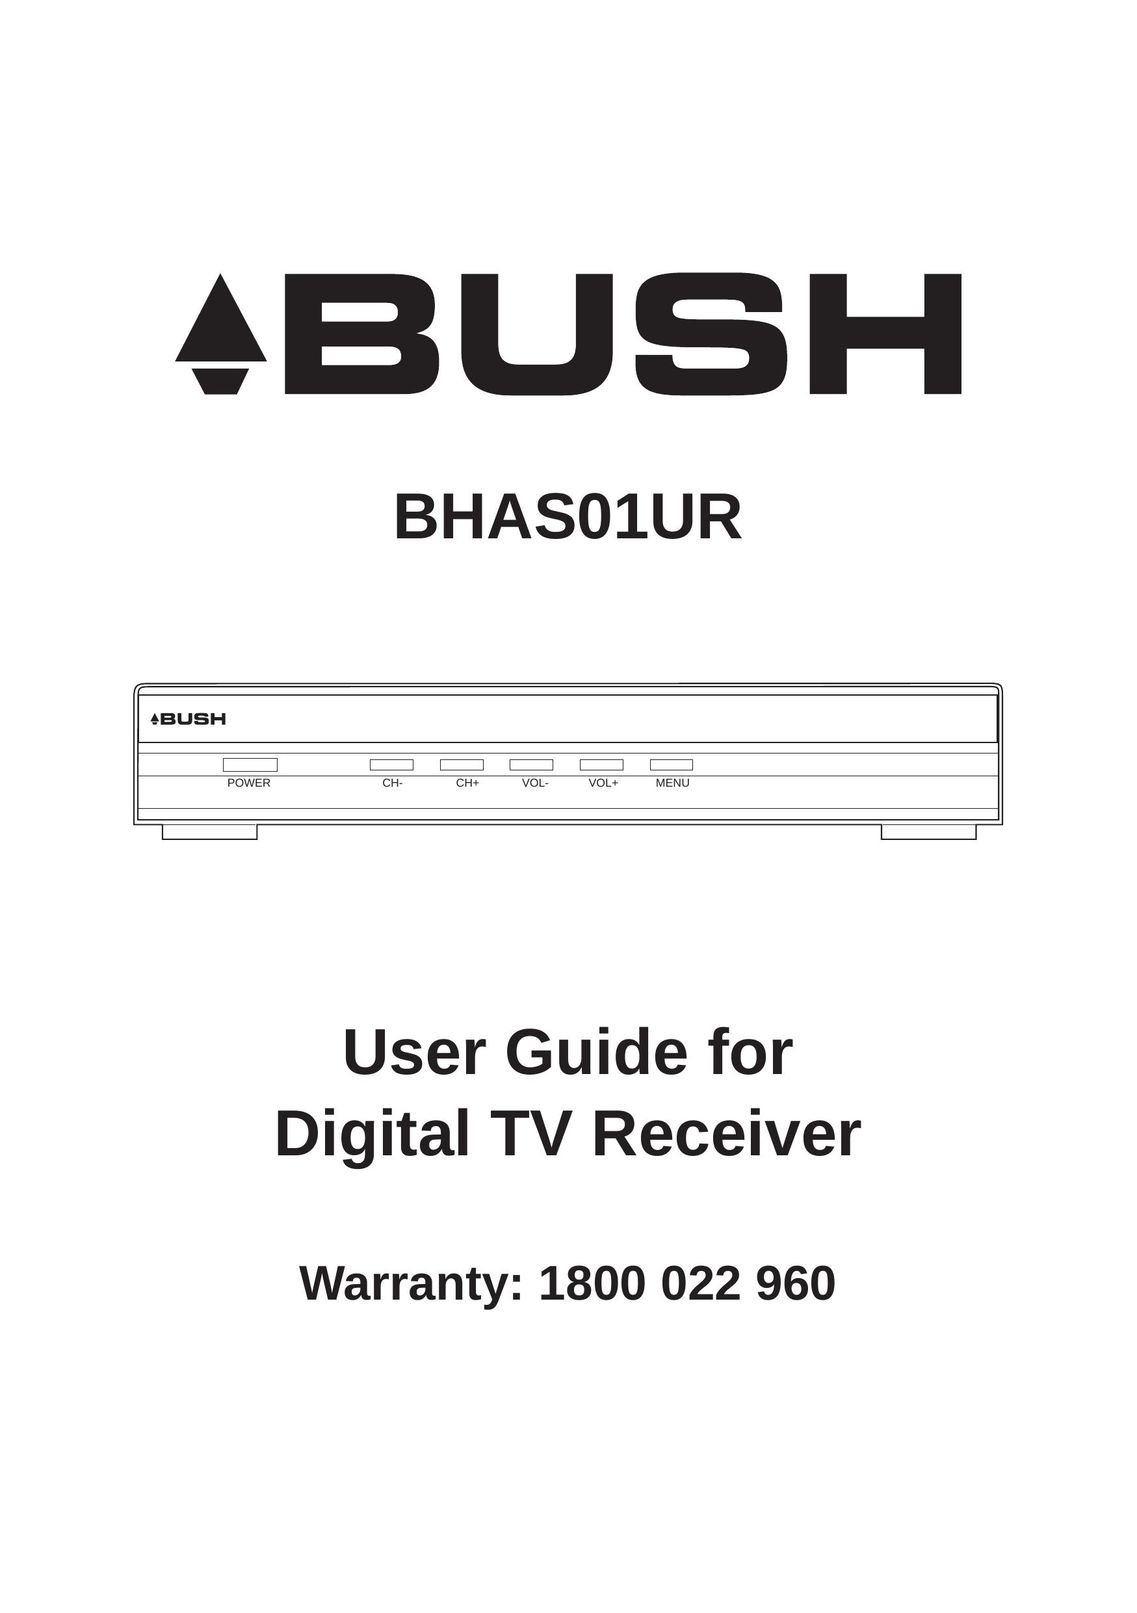 Bush BHAS01UR TV Receiver User Manual